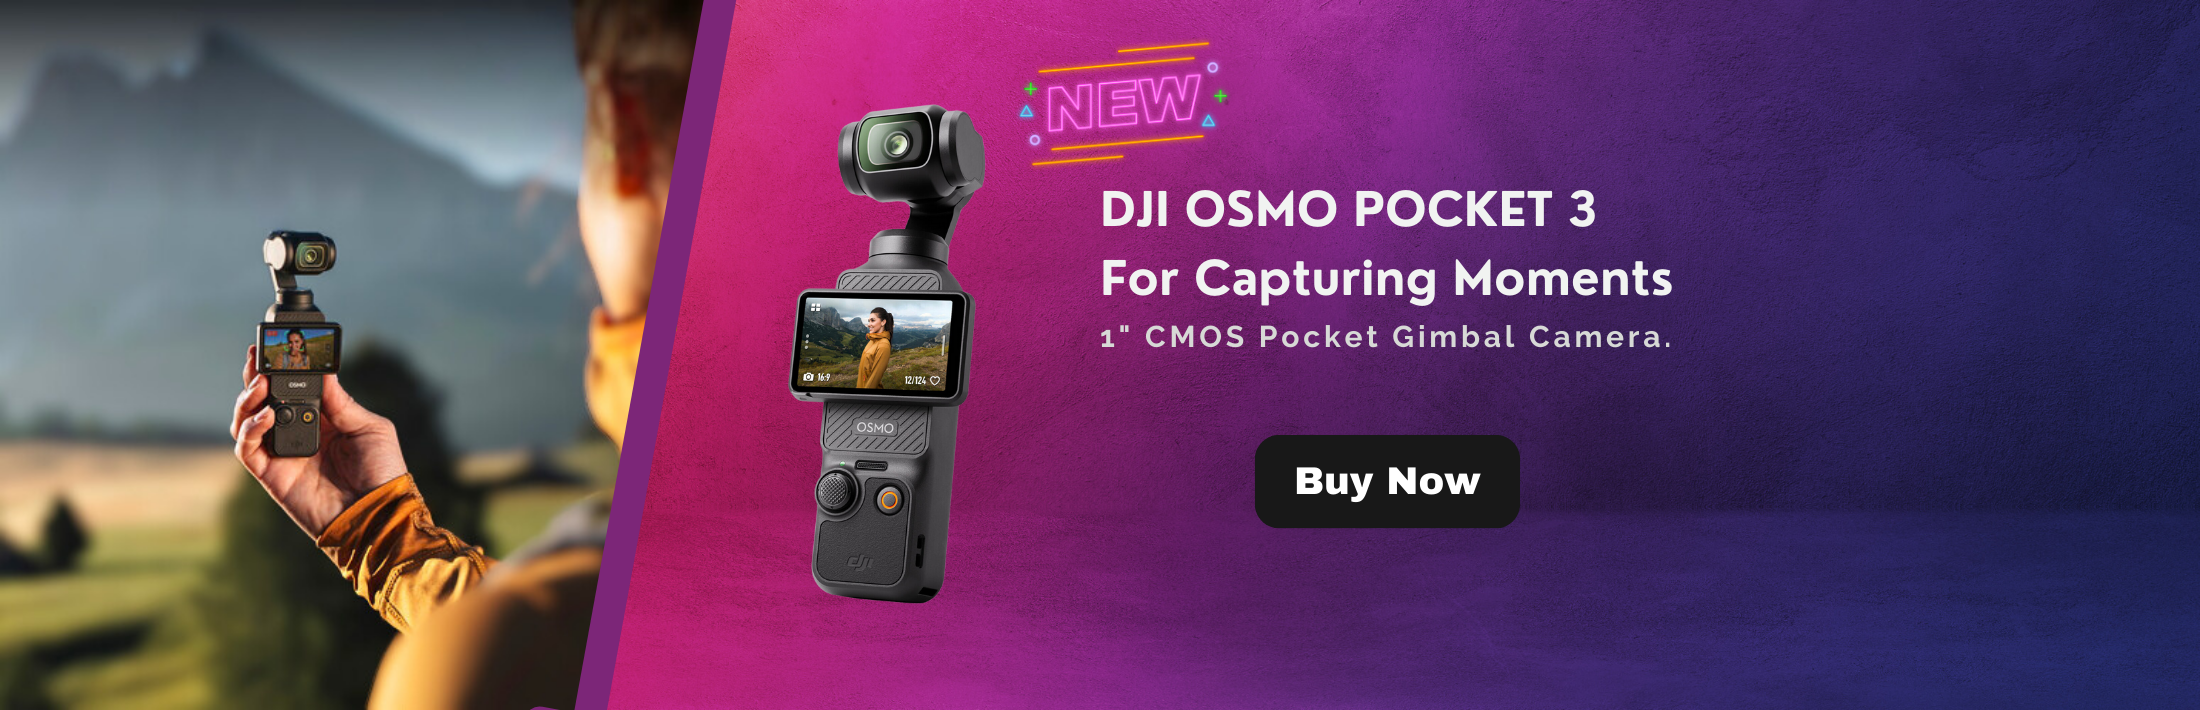 DJI-OSMO-POCKET-3-For-Capturing-Moments-1-CMOS-Pocket-Gimbal-Camera